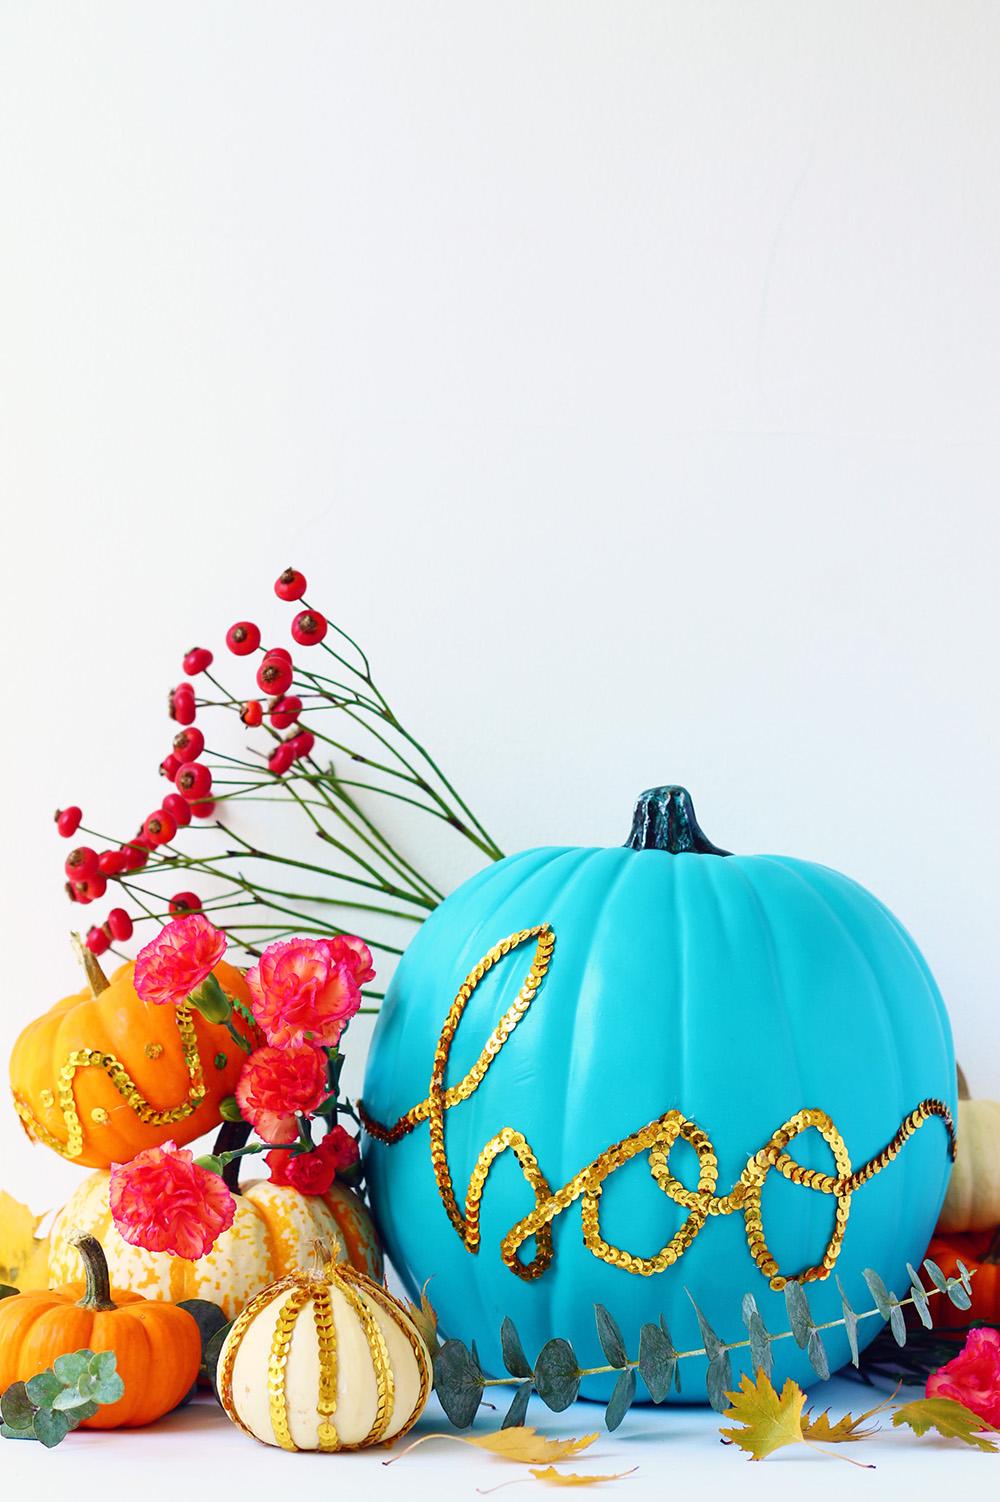 DIY colorful gold sequin trim pumpkins for Halloween (via squirrellyminds.com)